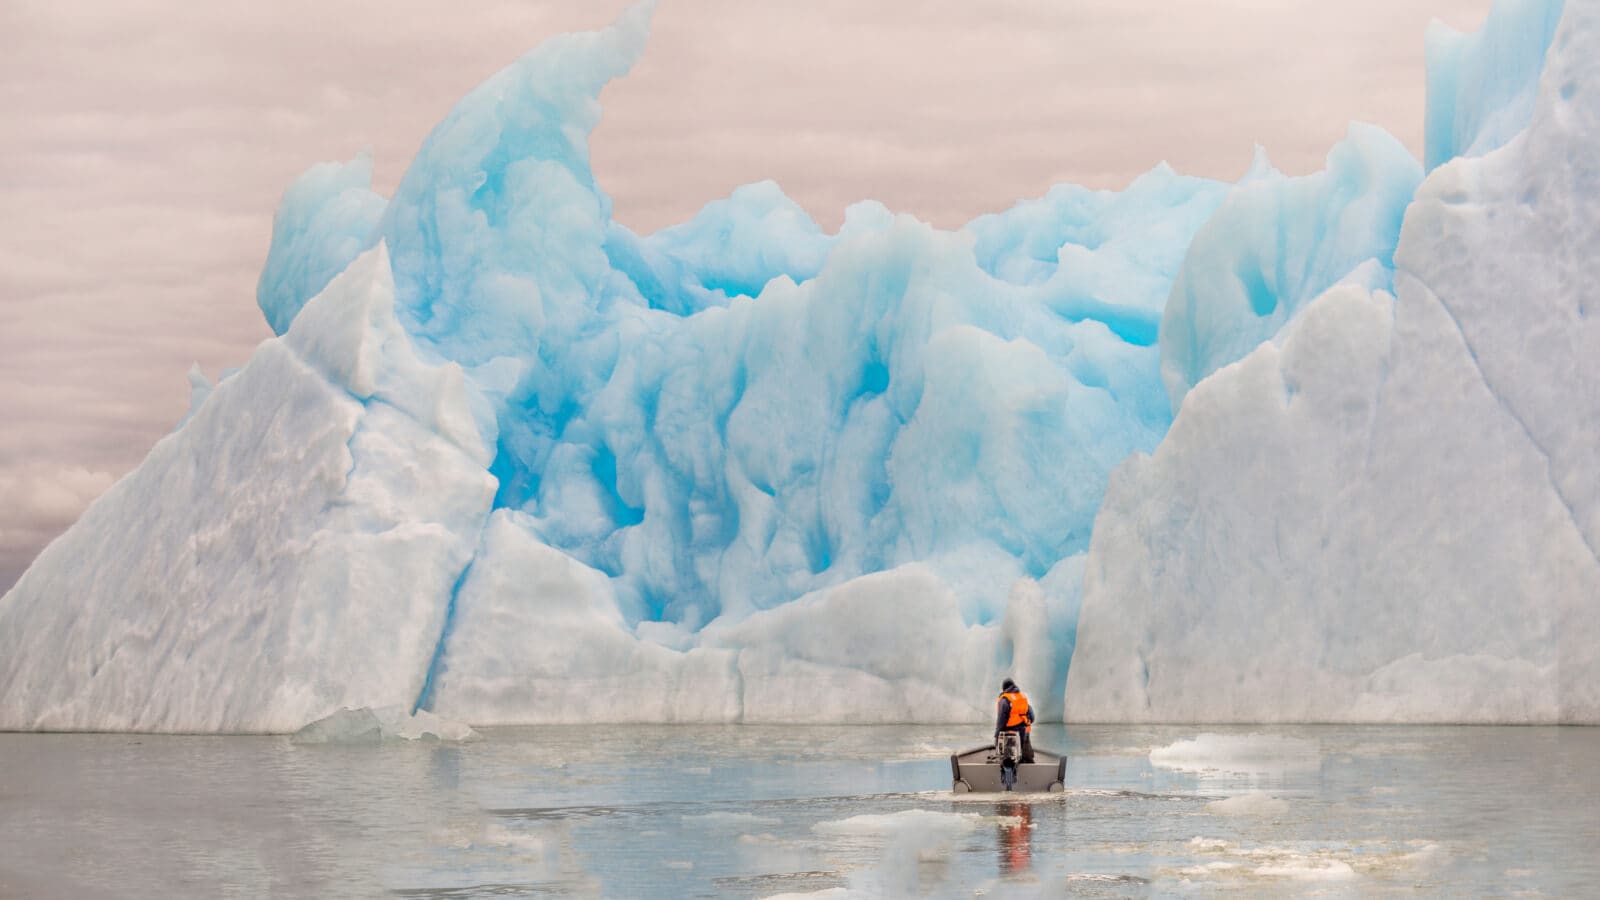 Man in boat near an iceberg in the sea